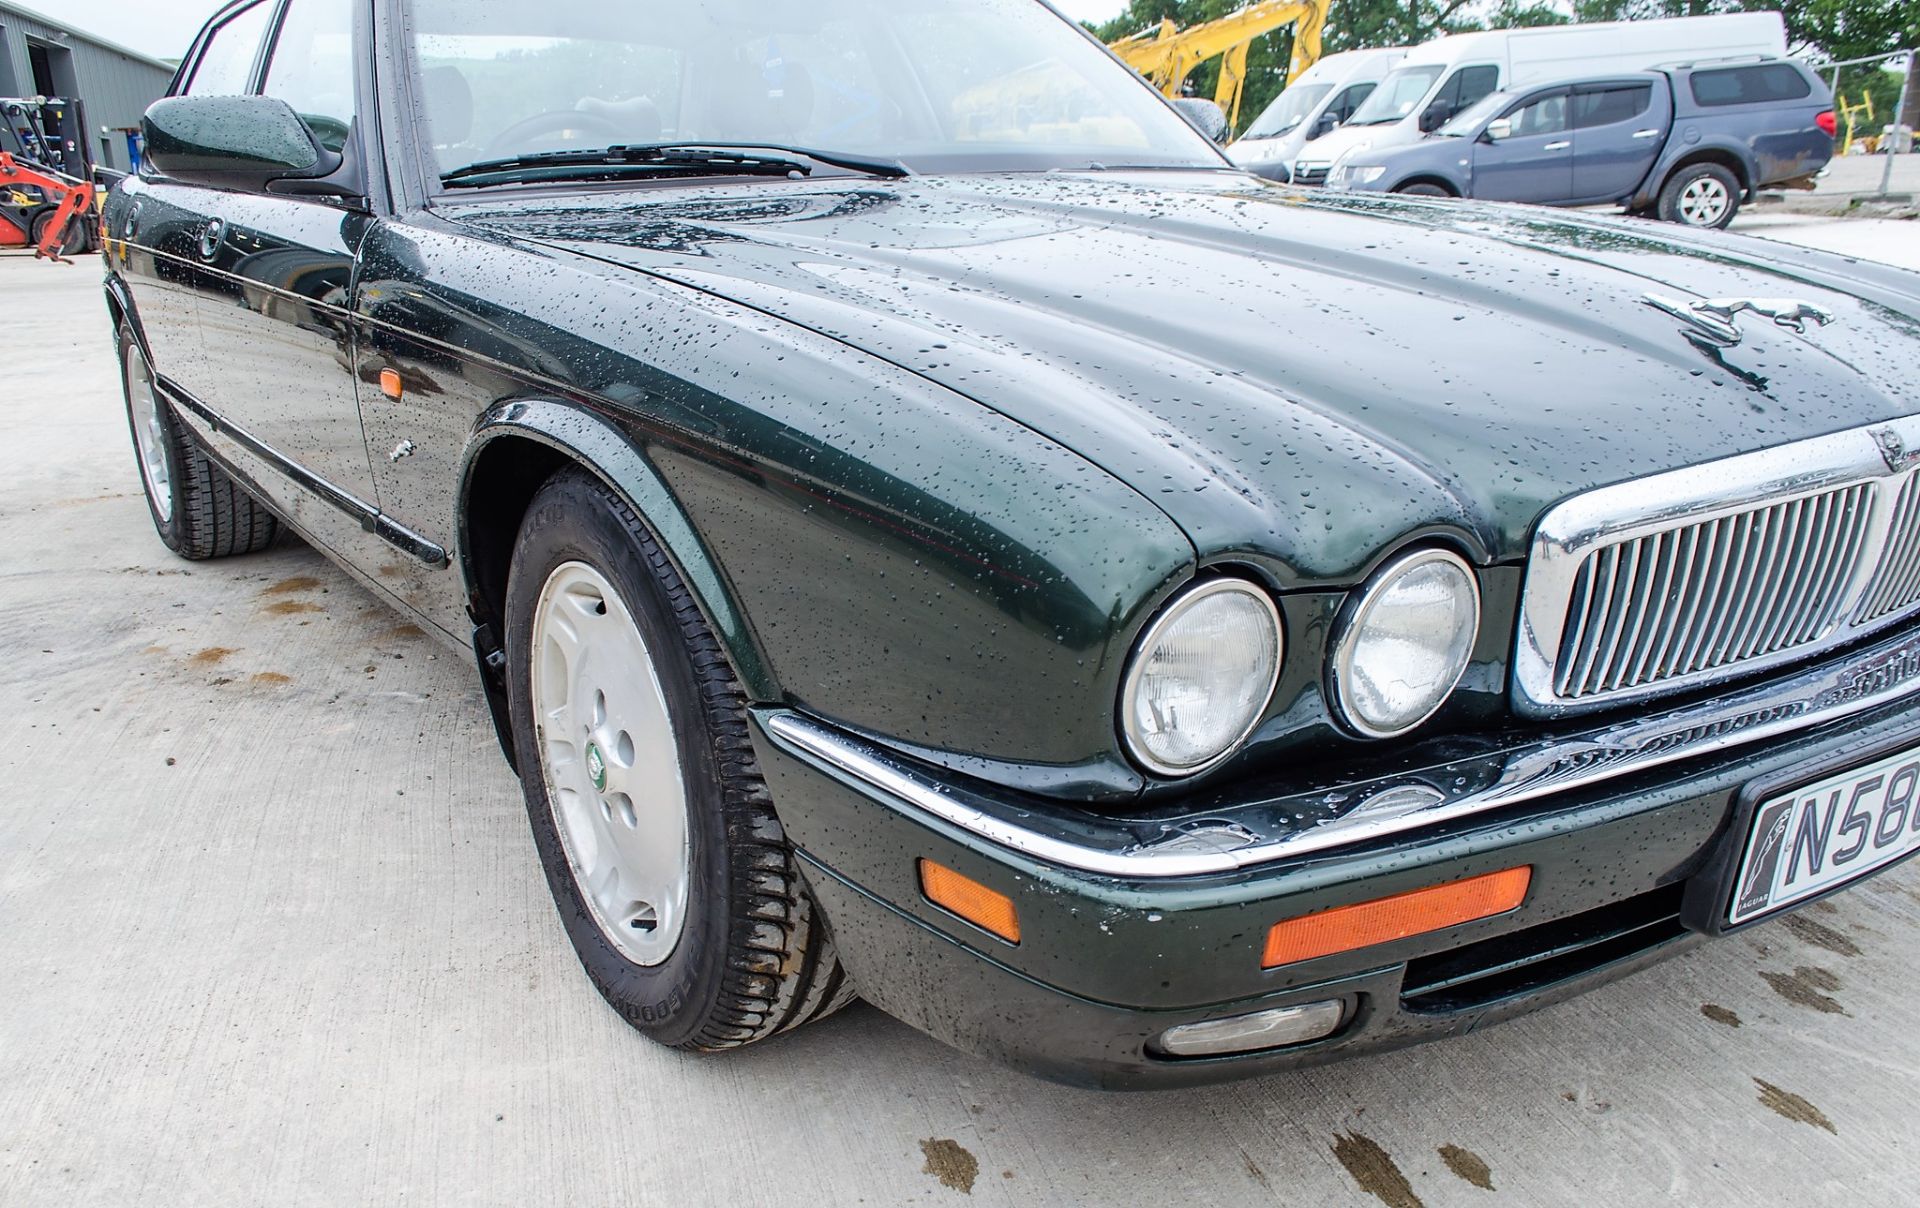 Jaguar XJ6 3.2 Sport petrol automatic 4 door saloon car Registration Number: N586 HUY Date of - Image 10 of 28